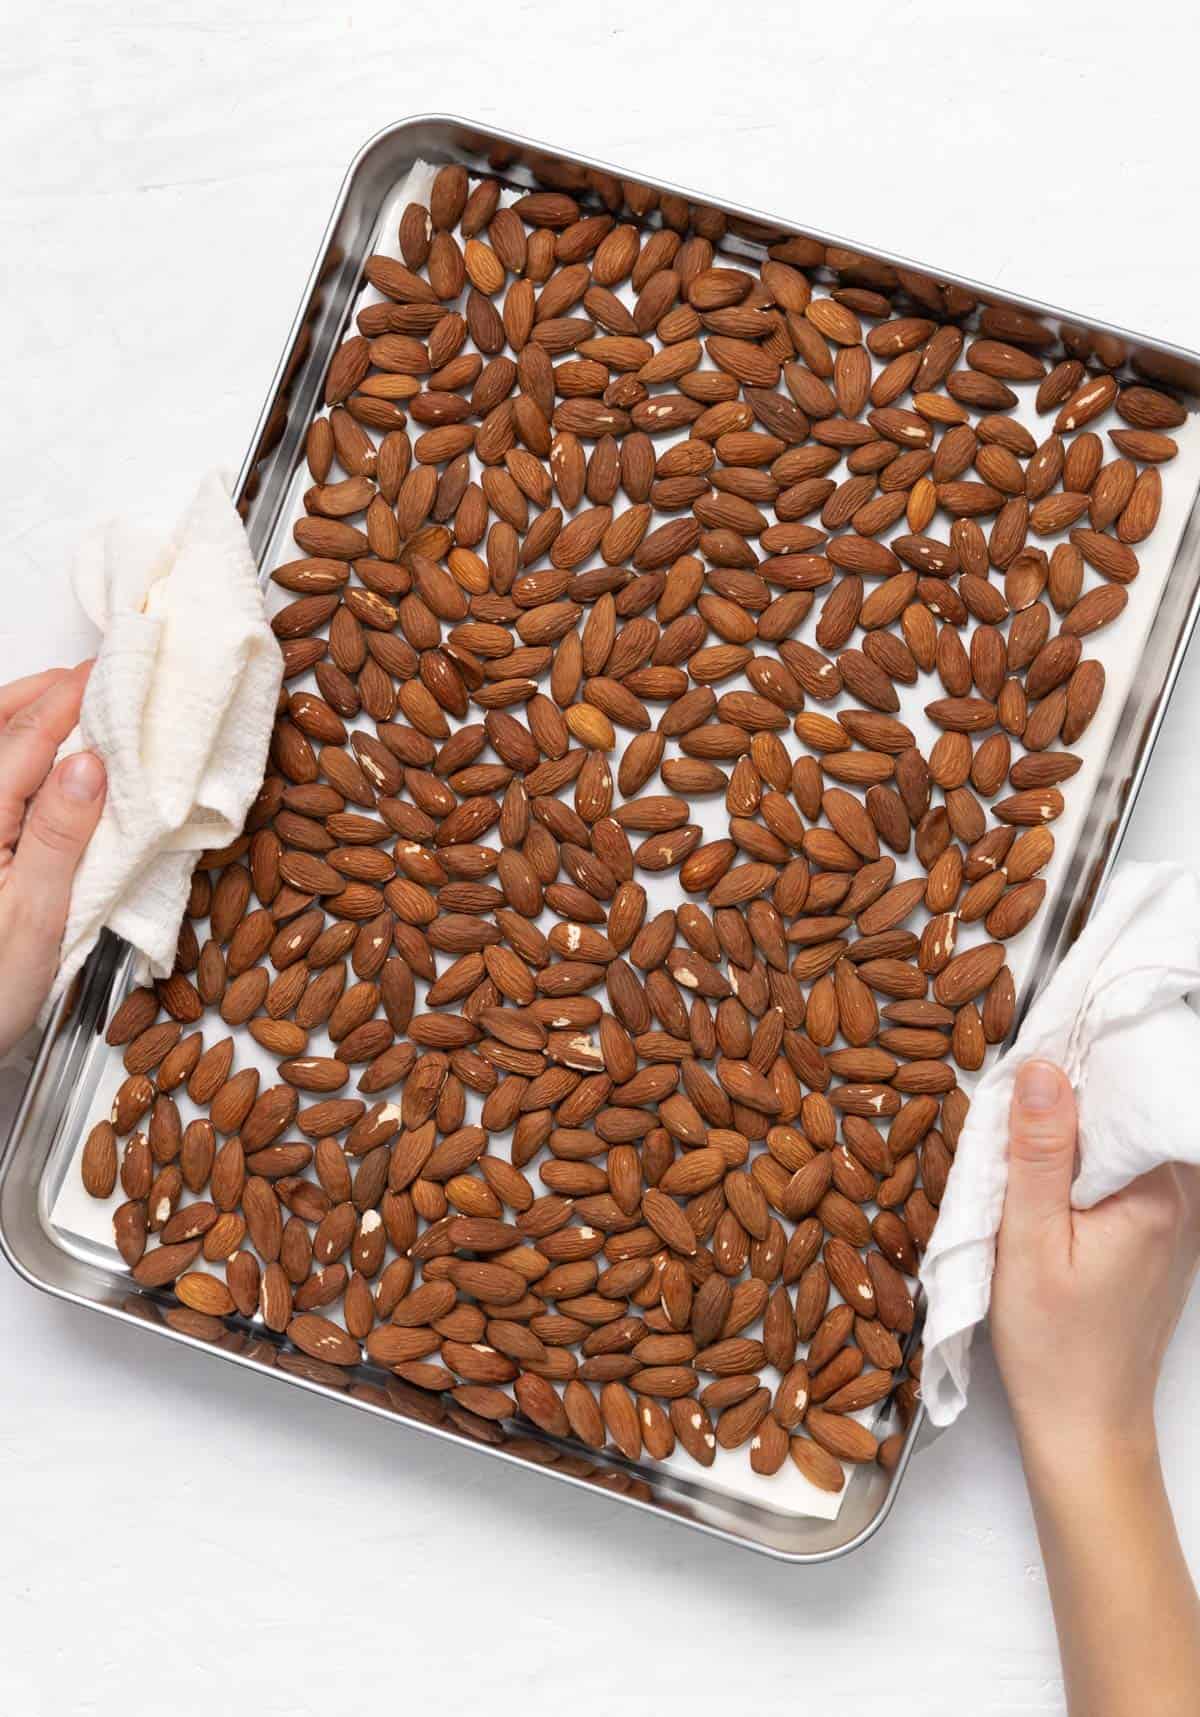 sheet pan of whole almonds